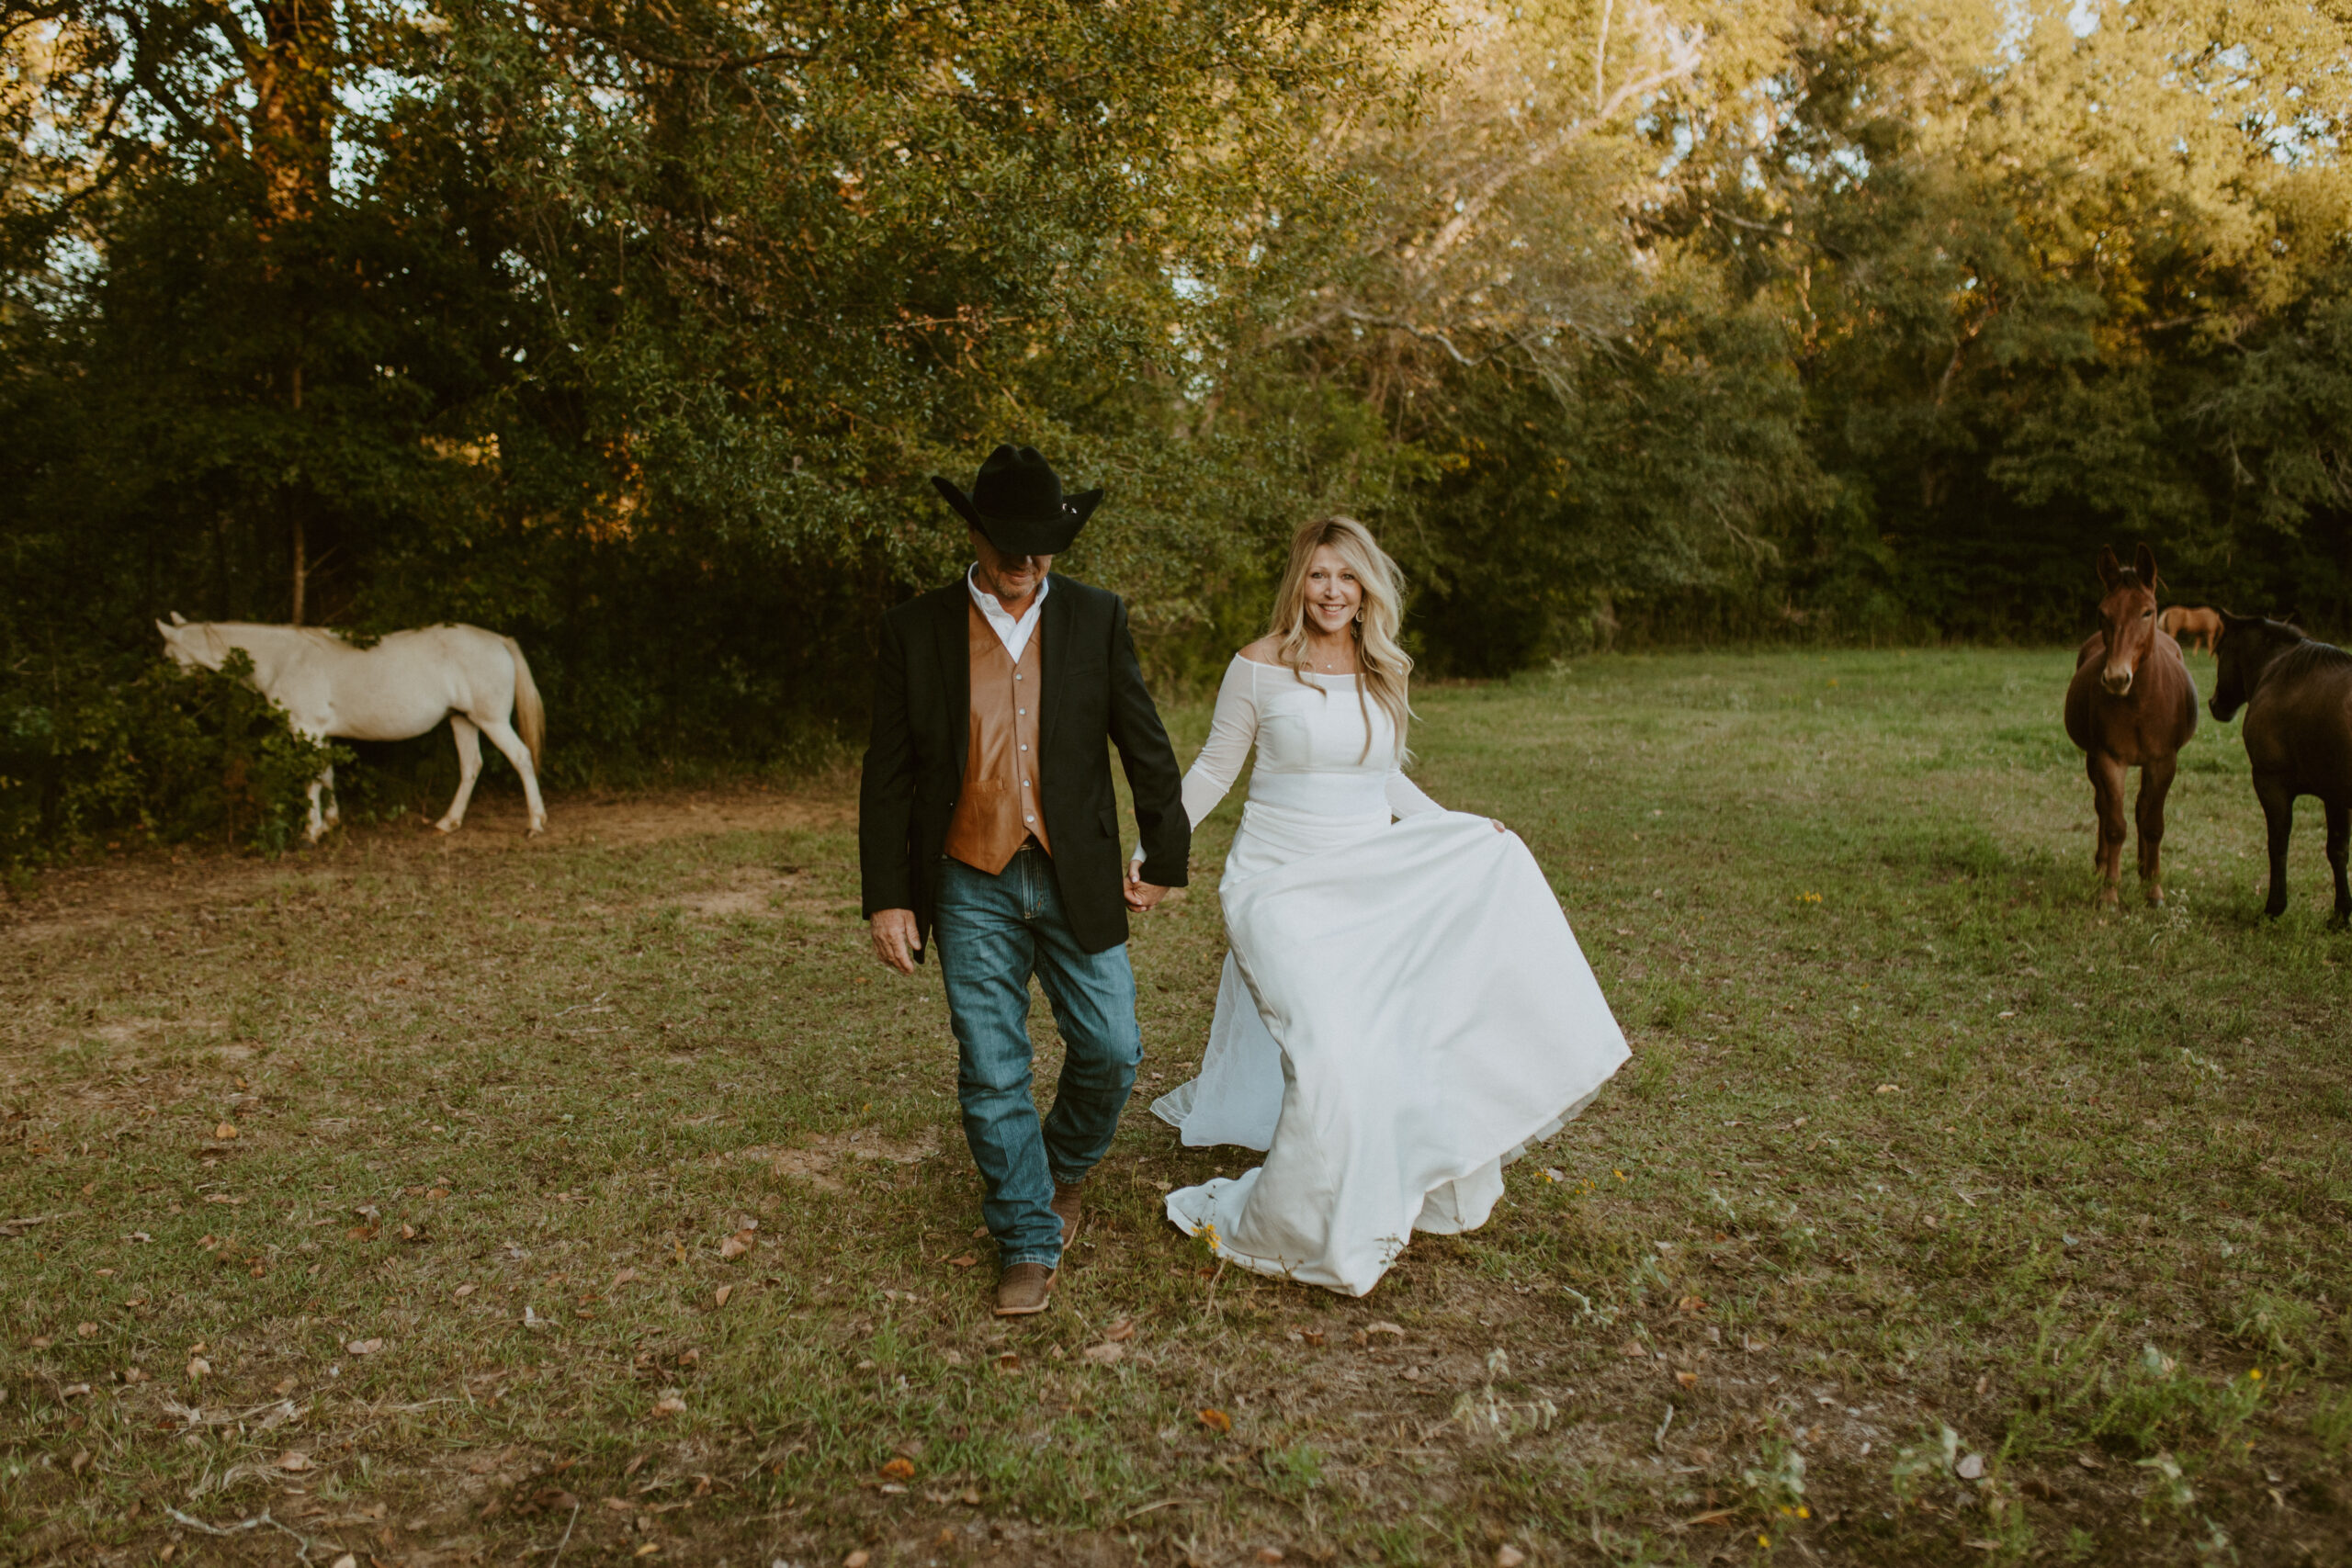 Intimate backyard wedding in East Texas by Sullivan Taylor